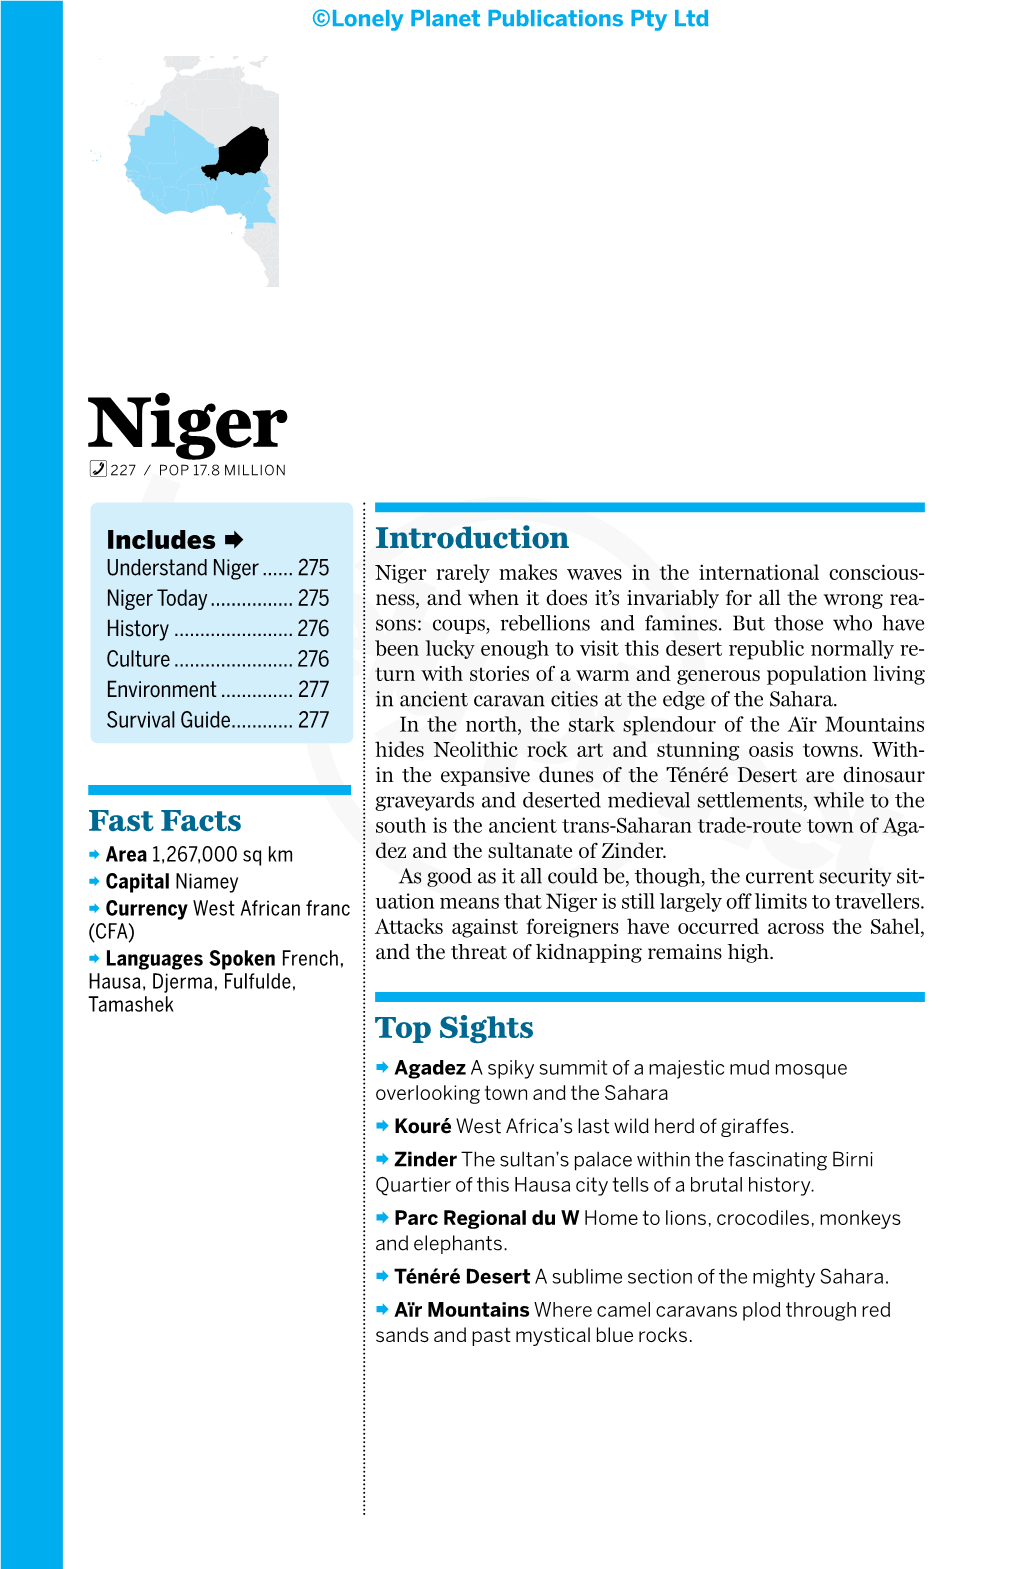 Niger% 227 / POP 17.8 MILLION